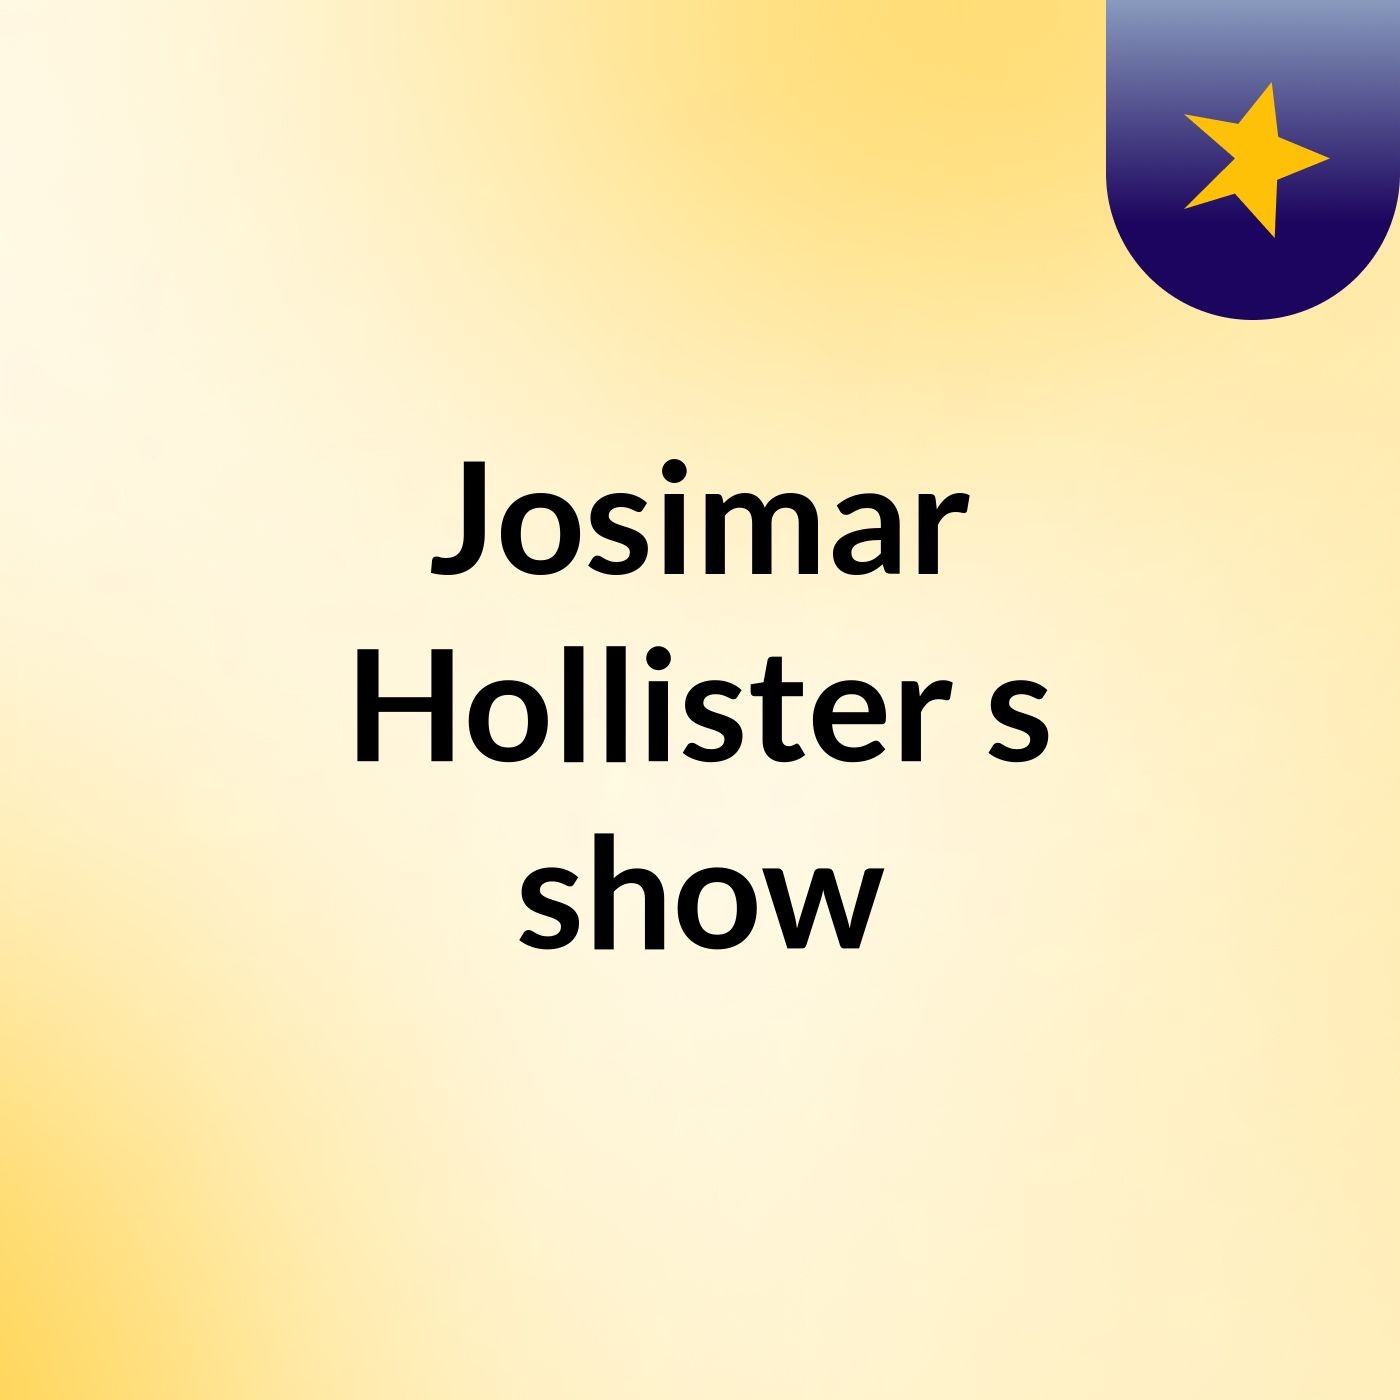 Josimar Hollister's show